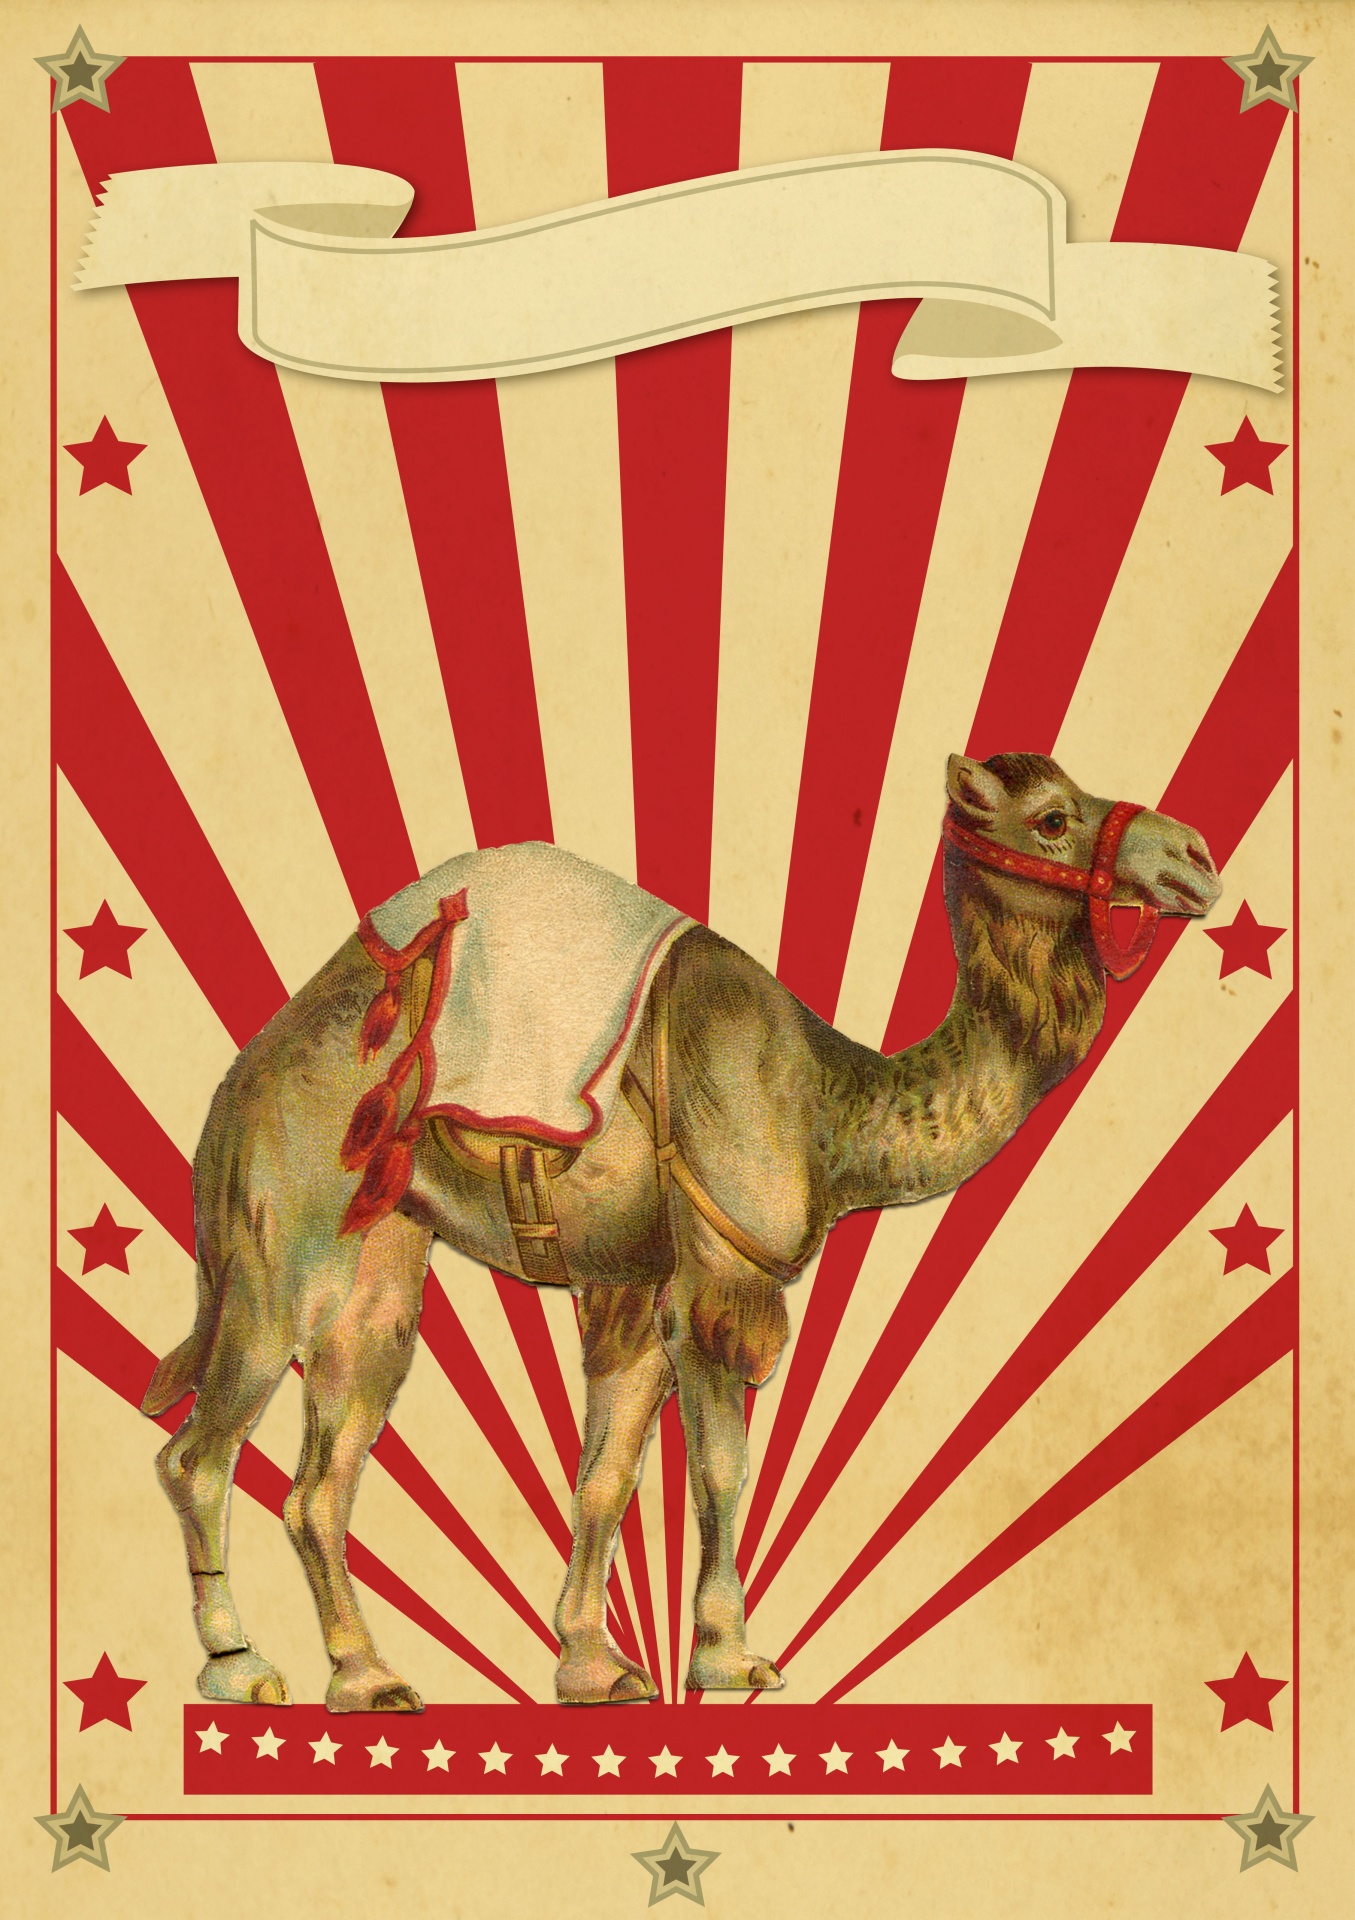 Cirkus retro plakát velbloud